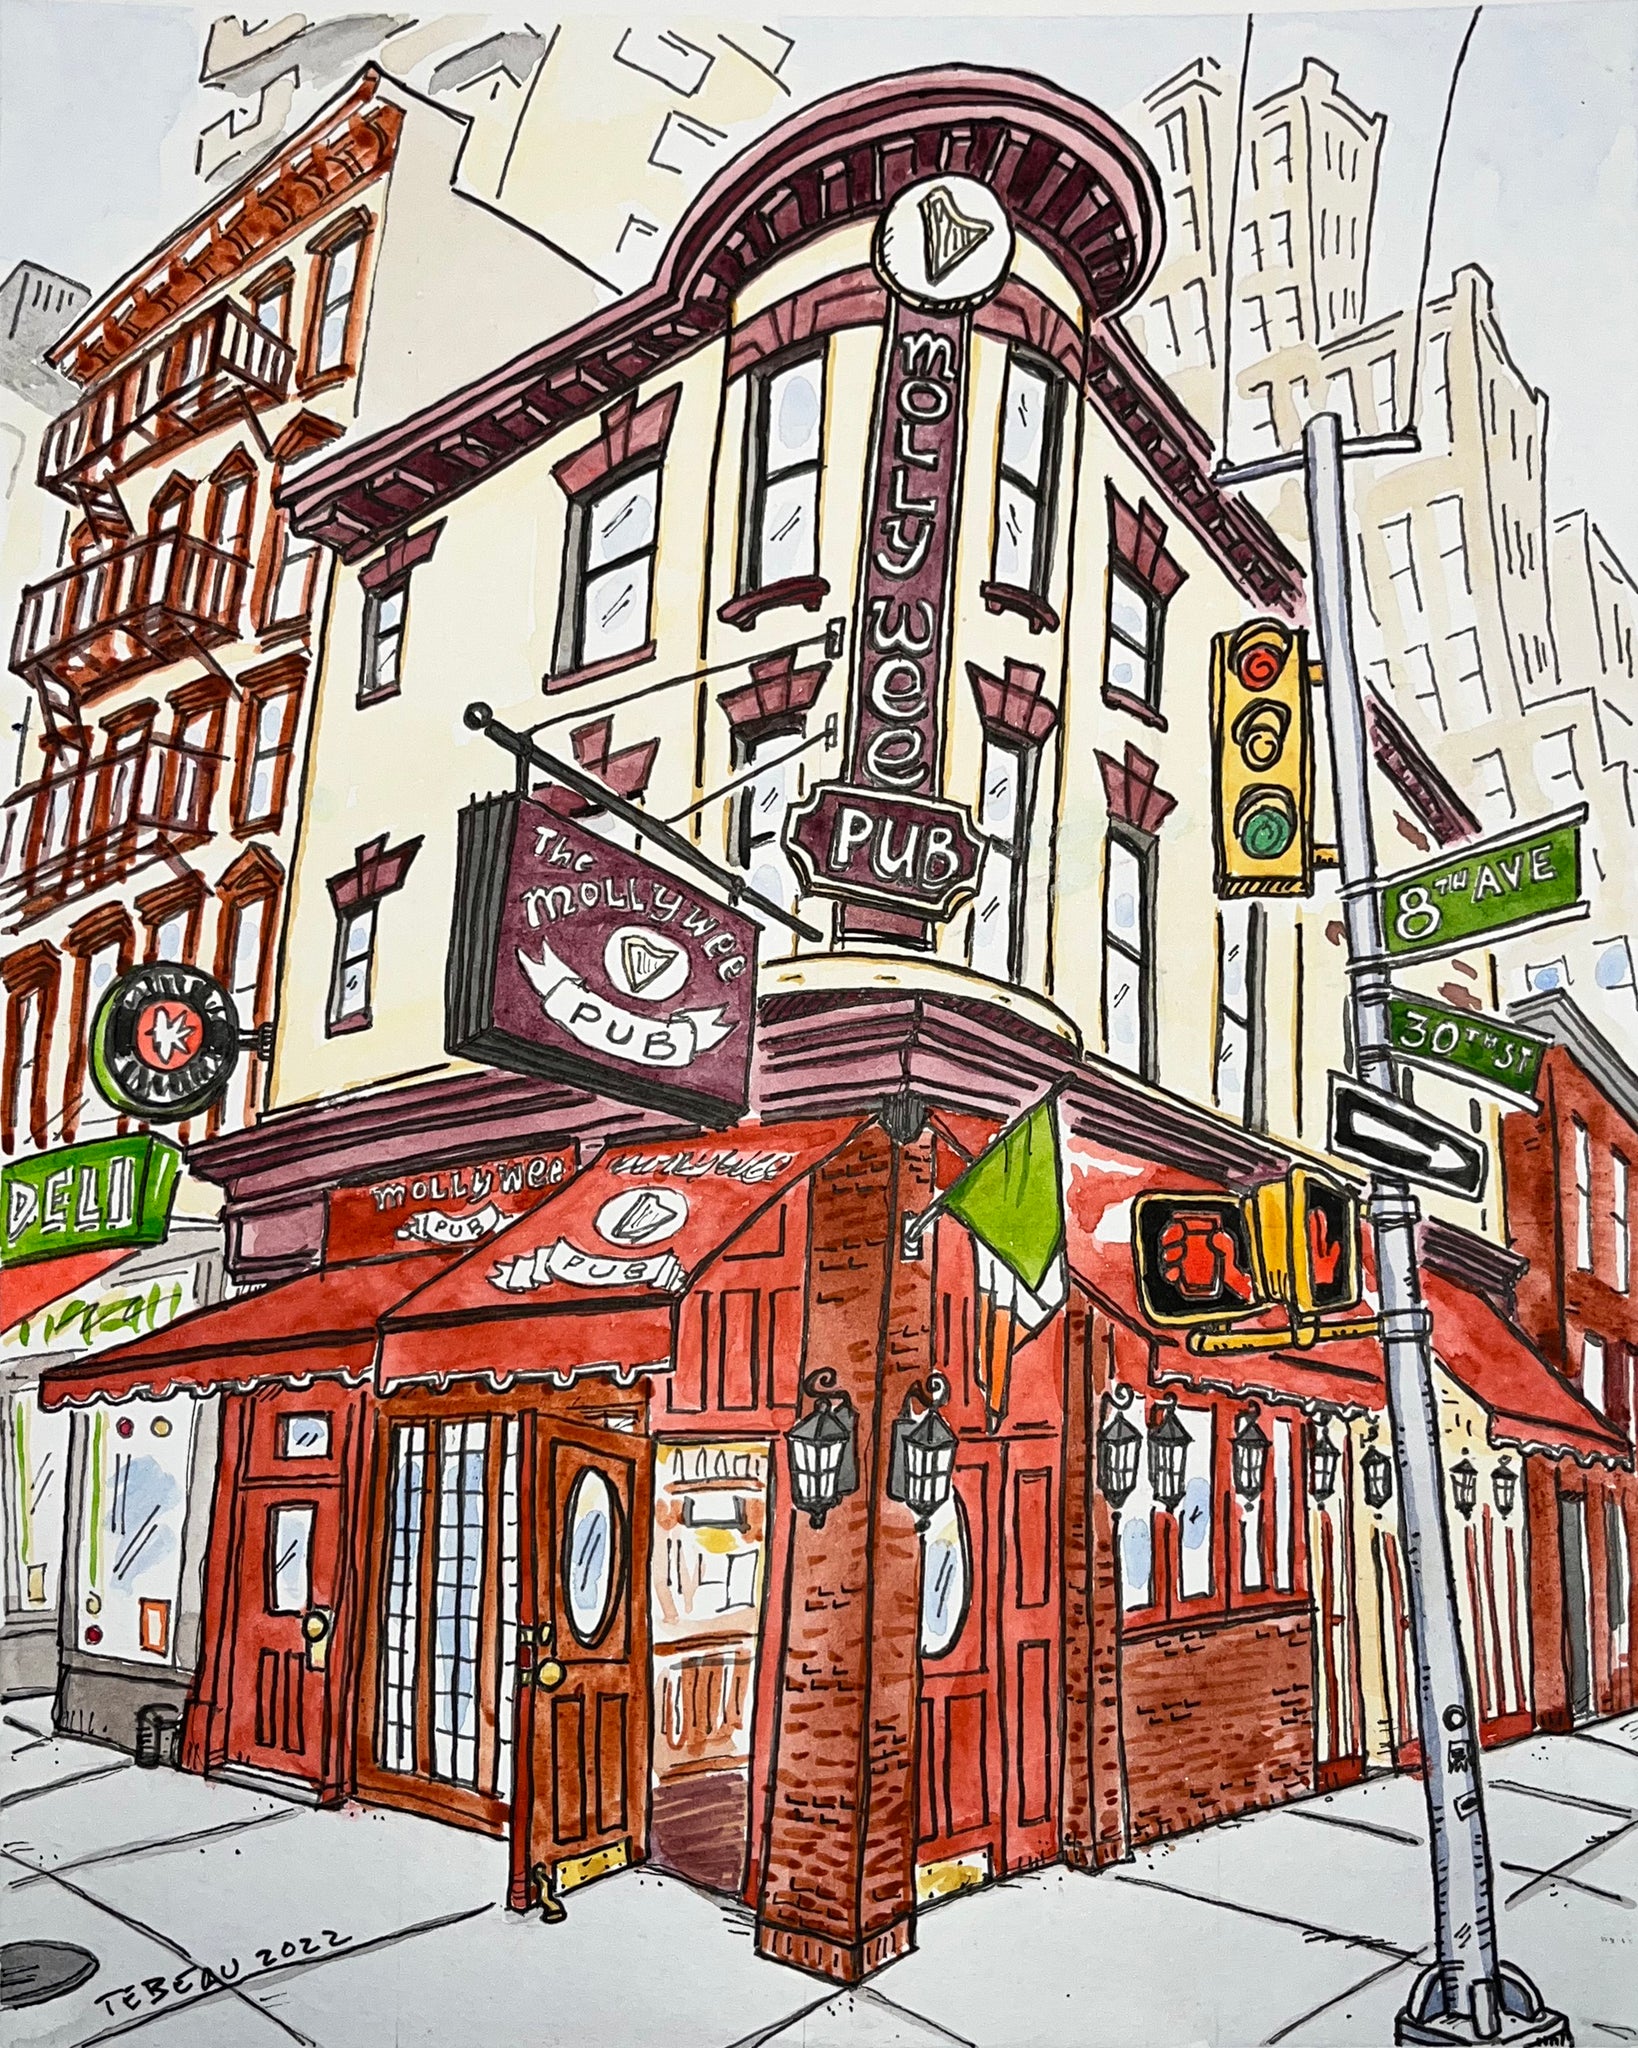 Molly Wee Pub of New York, NY: signed prints by John Tebeau